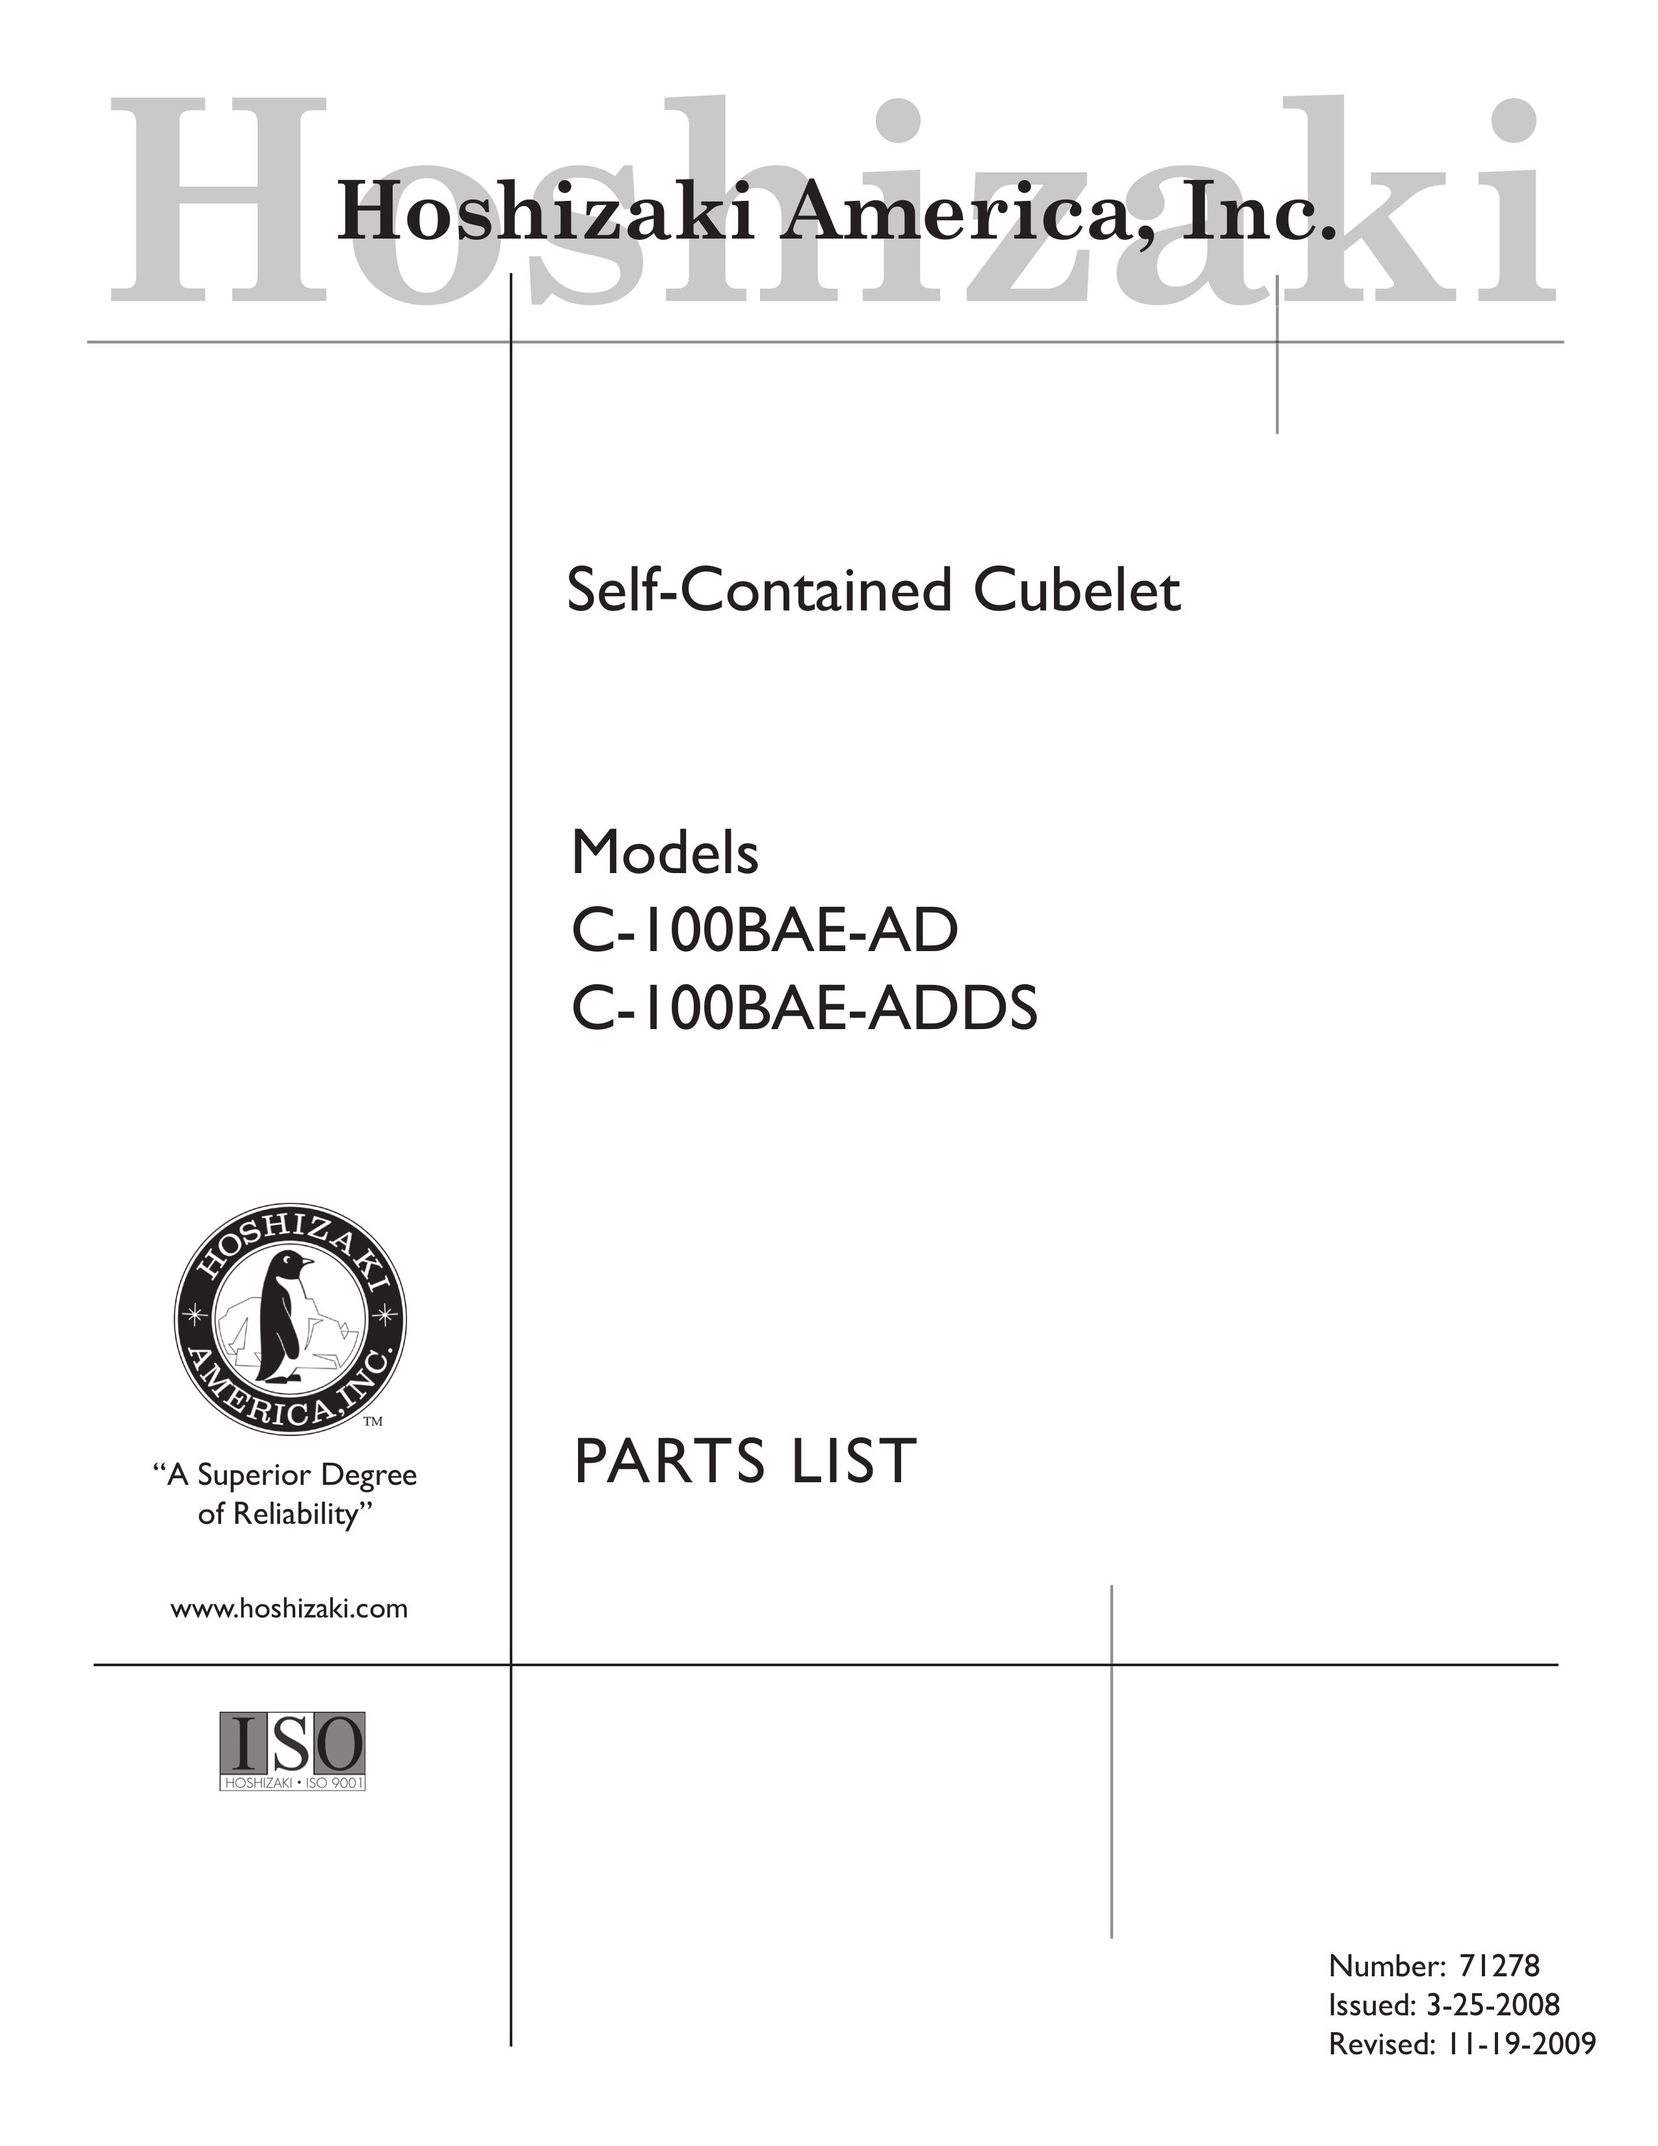 Hoshizaki C-100BAE-AD Ice Maker User Manual